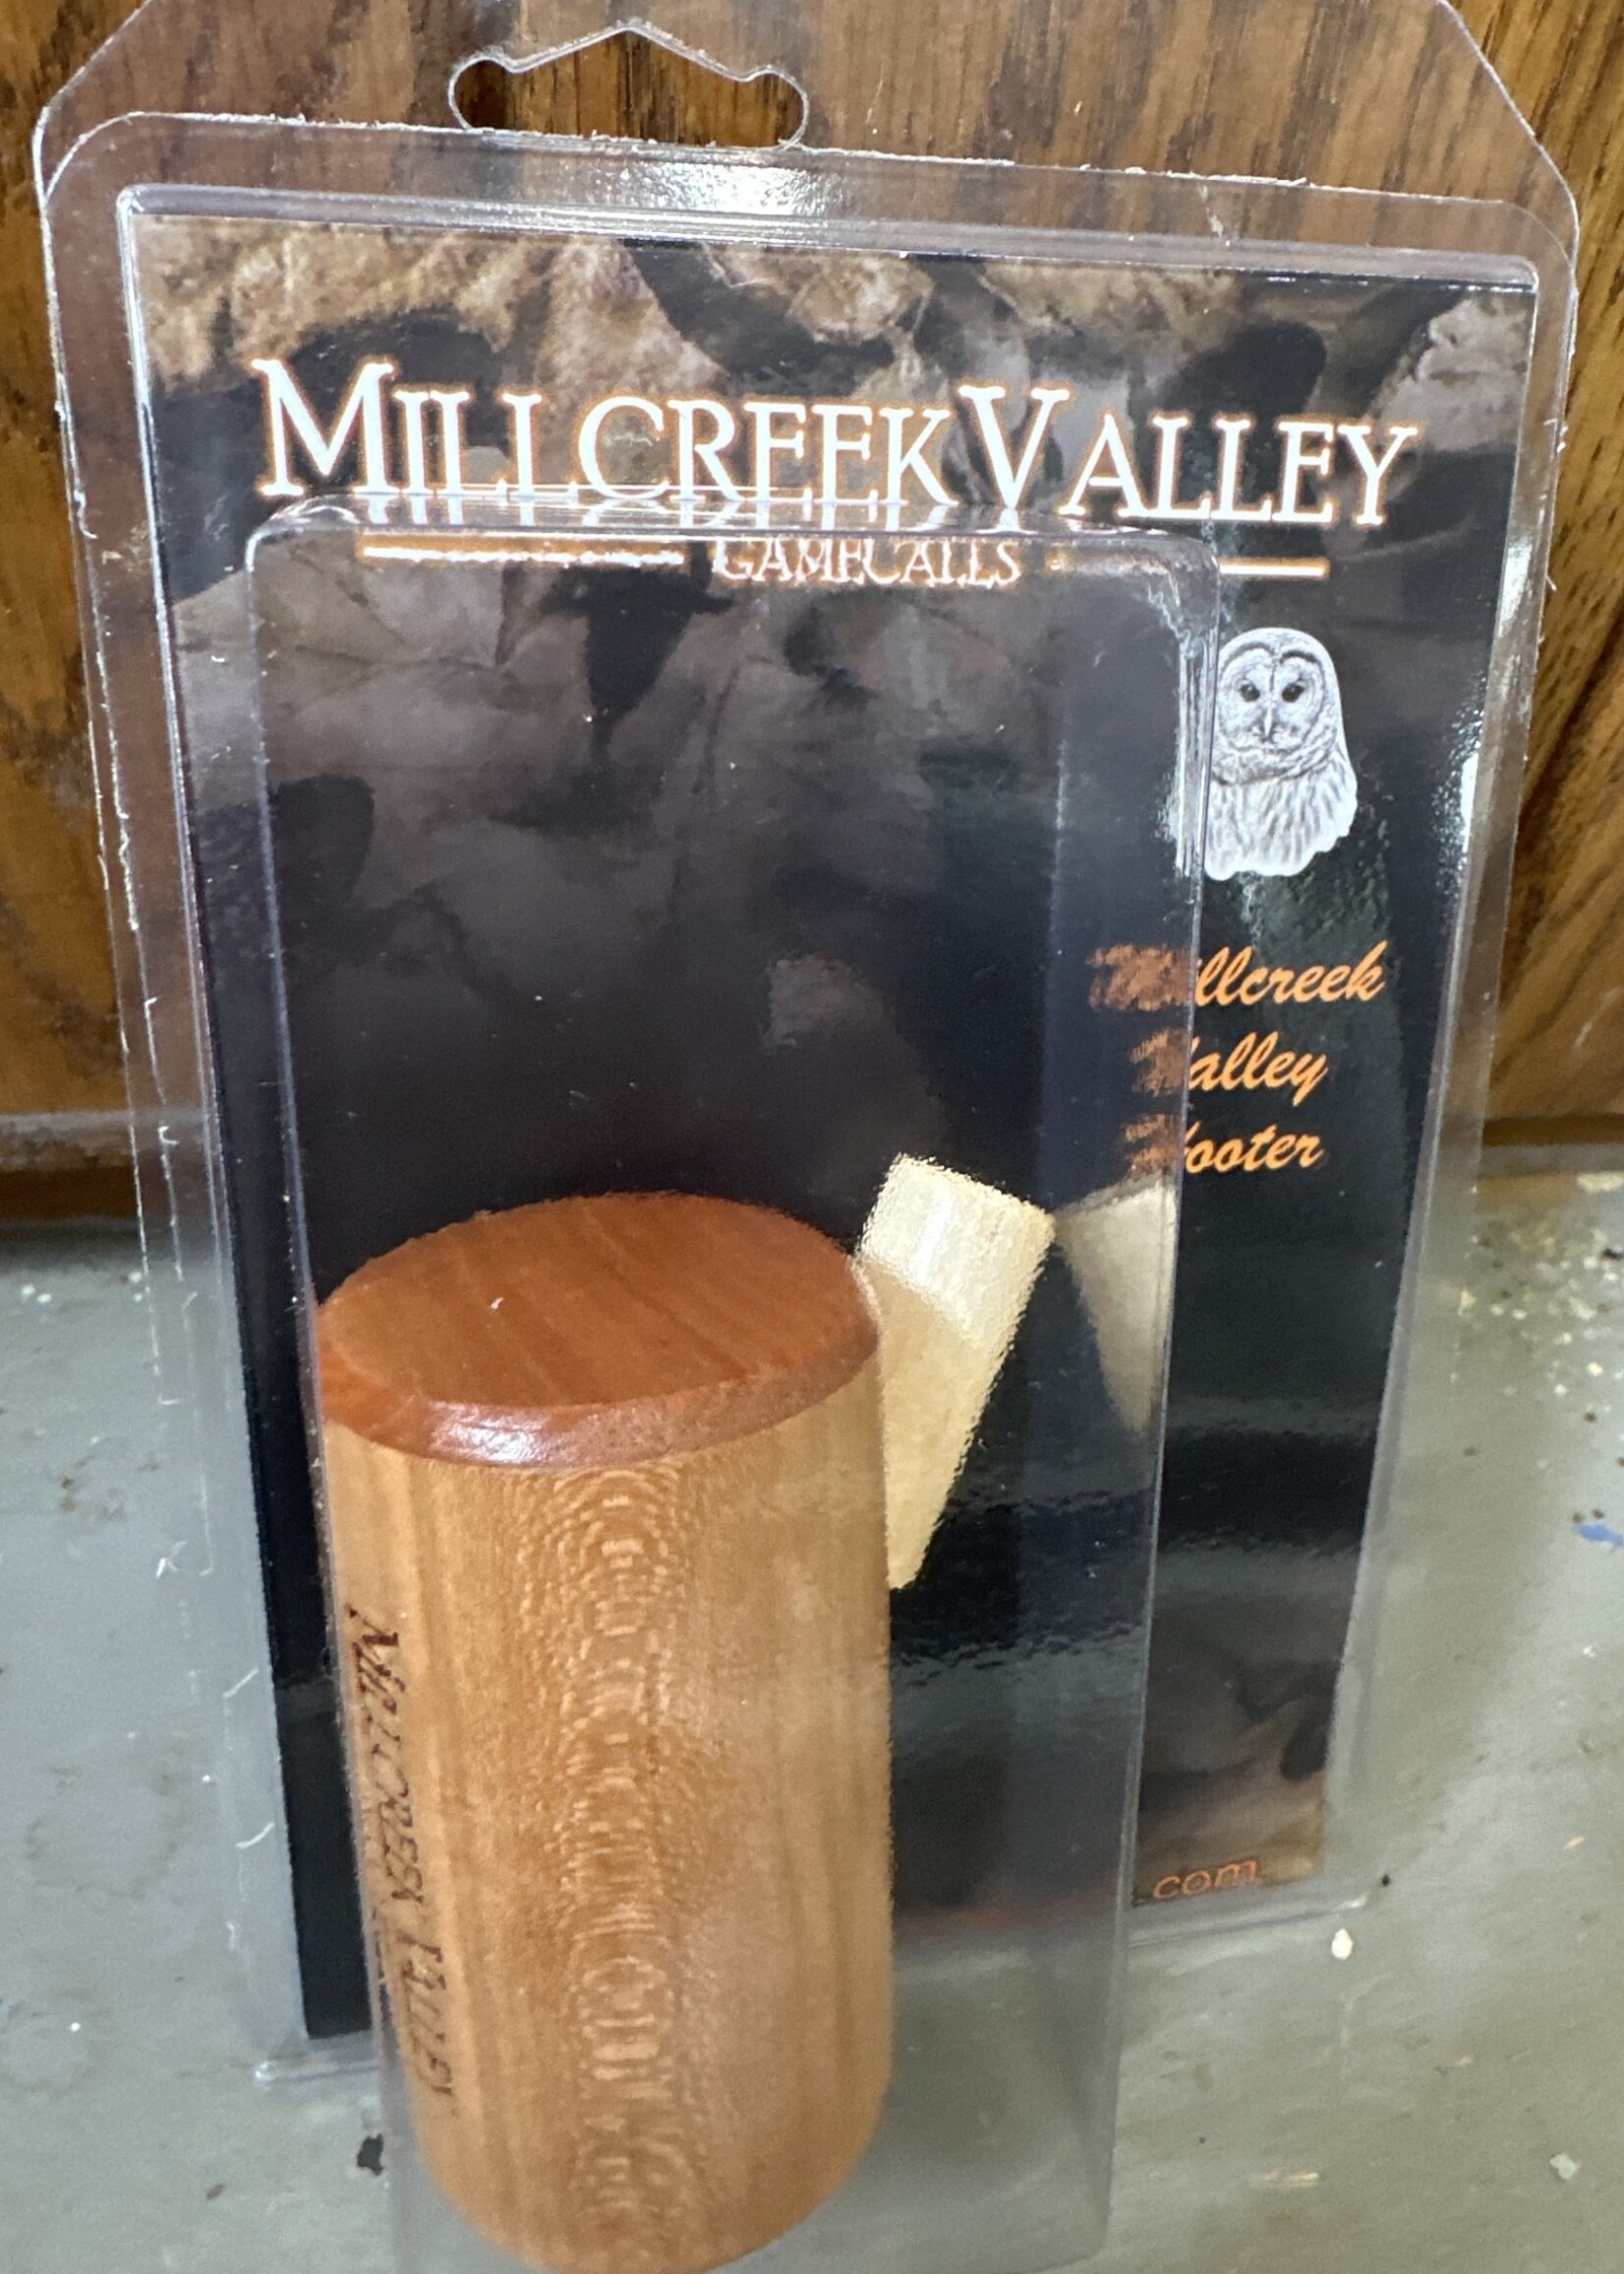 Millcreek Millcreek Valley Owl Hooter